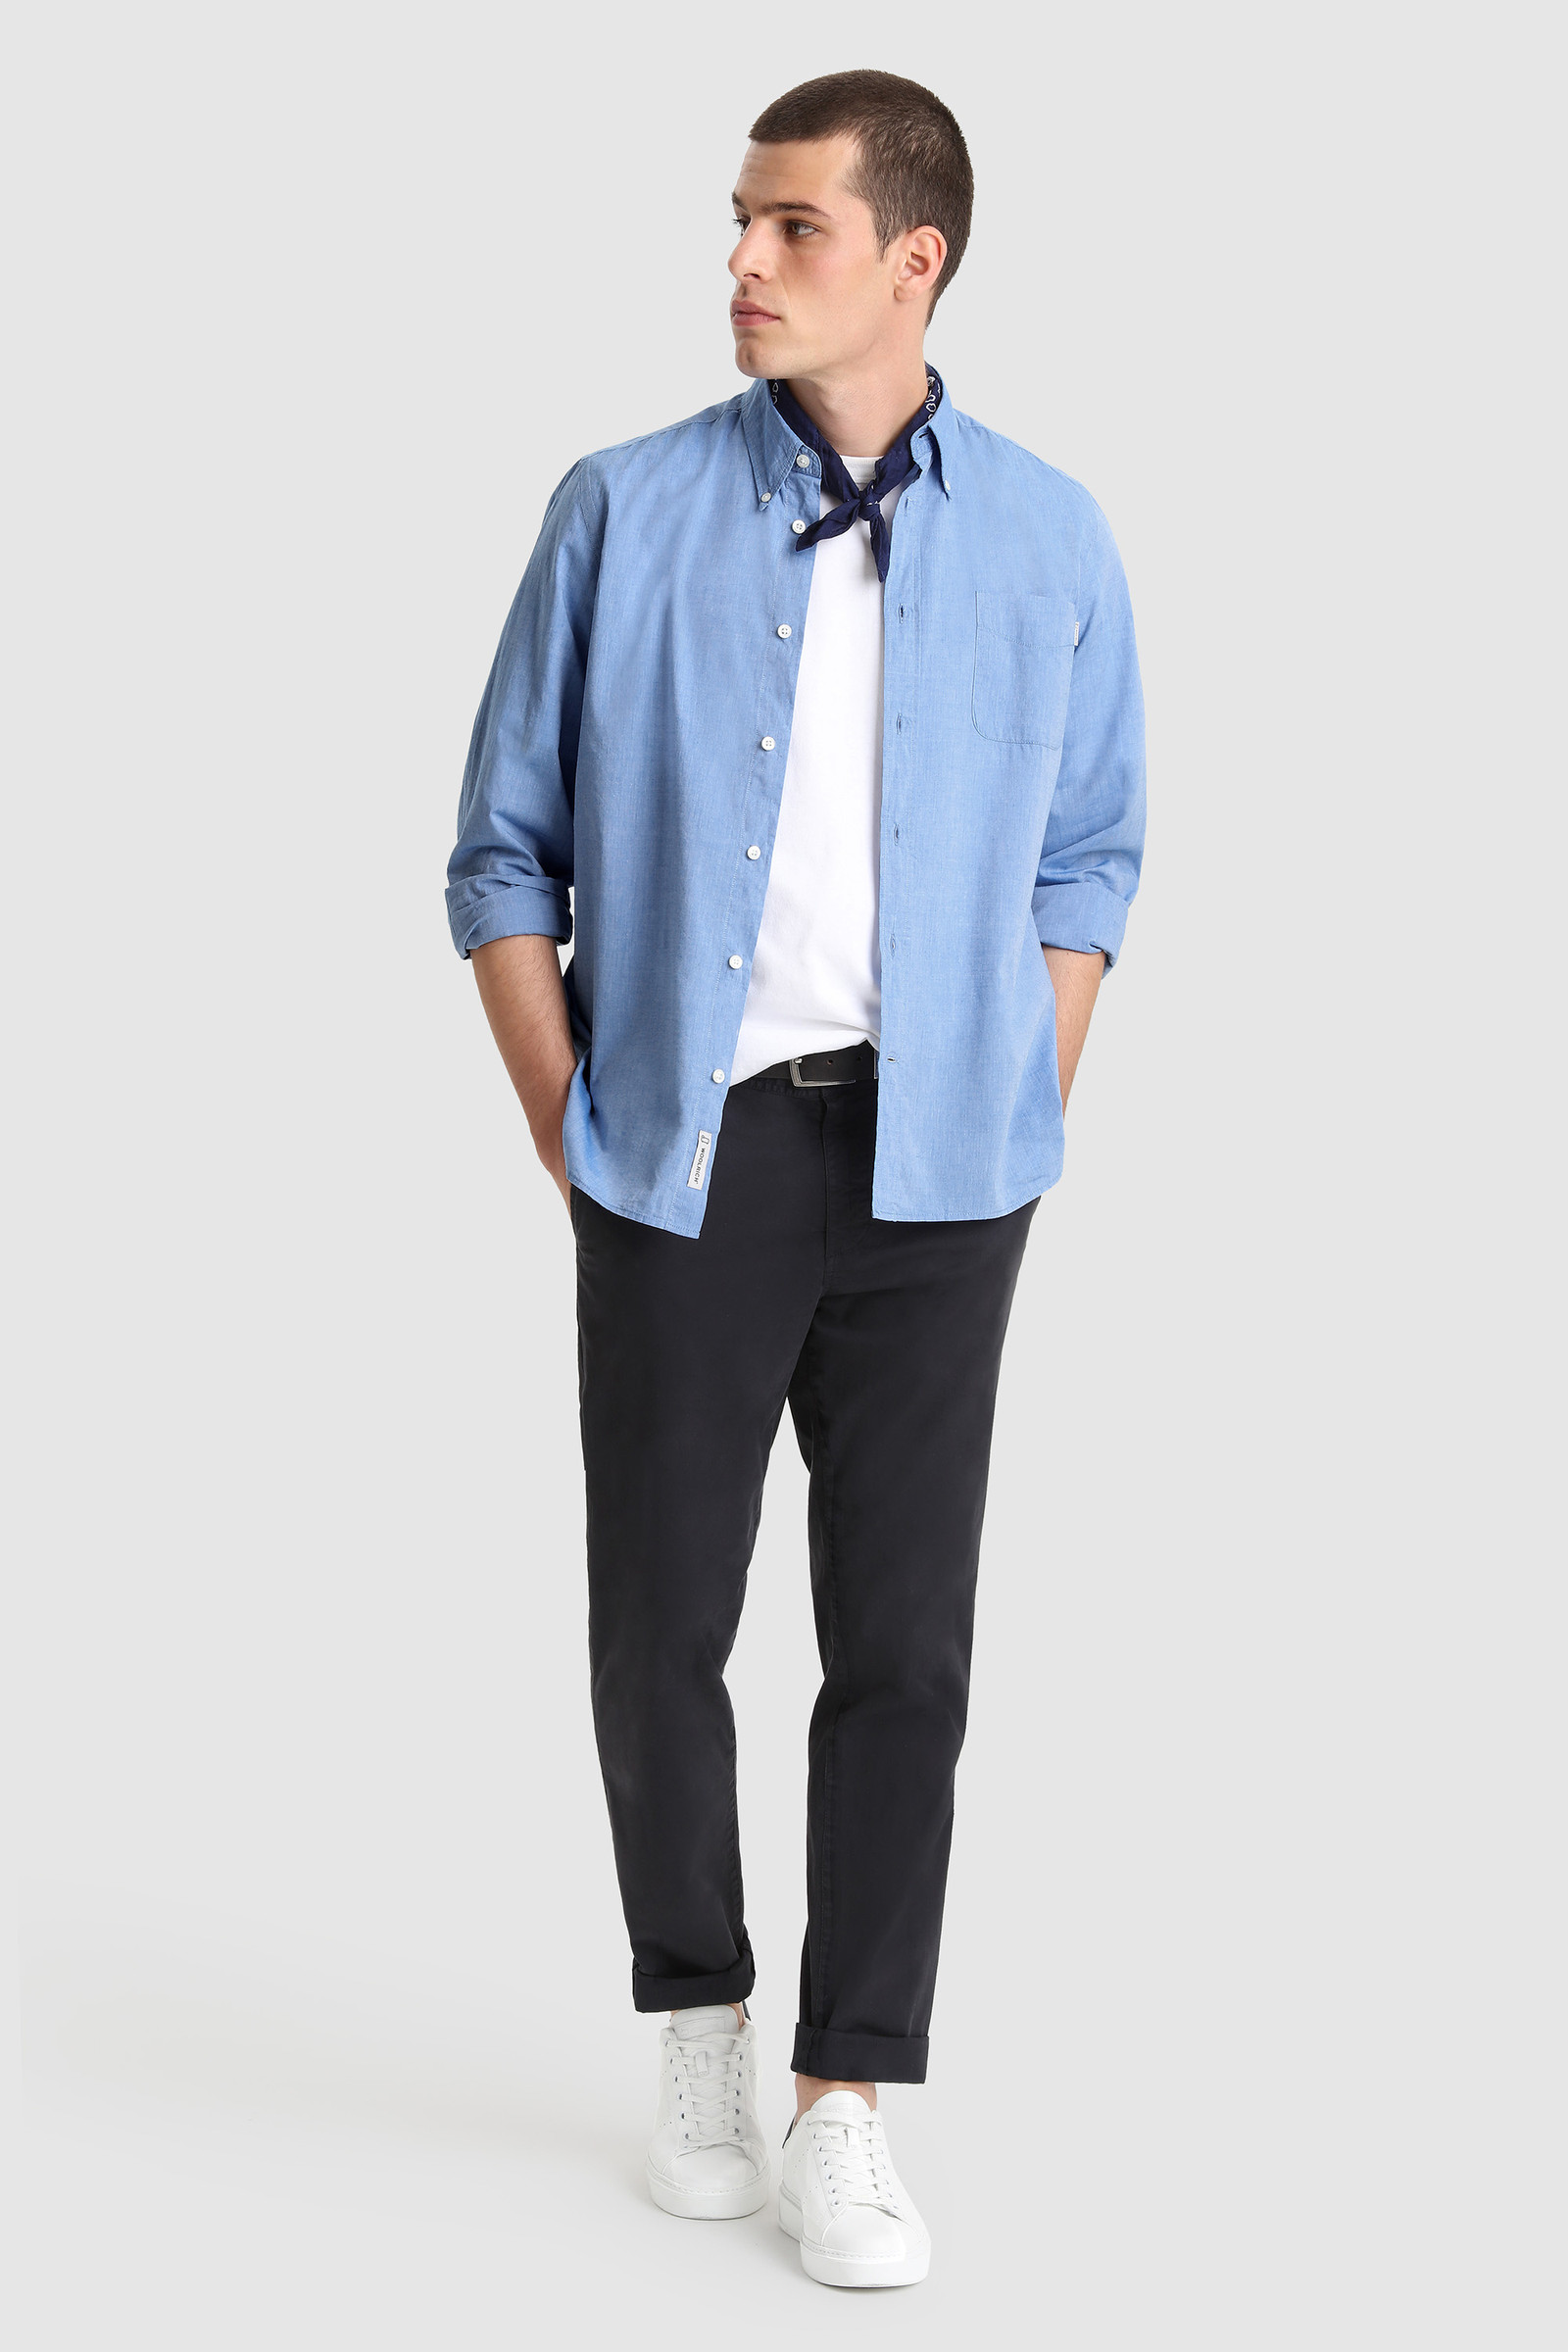 Chambray Button-Down Shirt in Light Cotton - Men - Blue